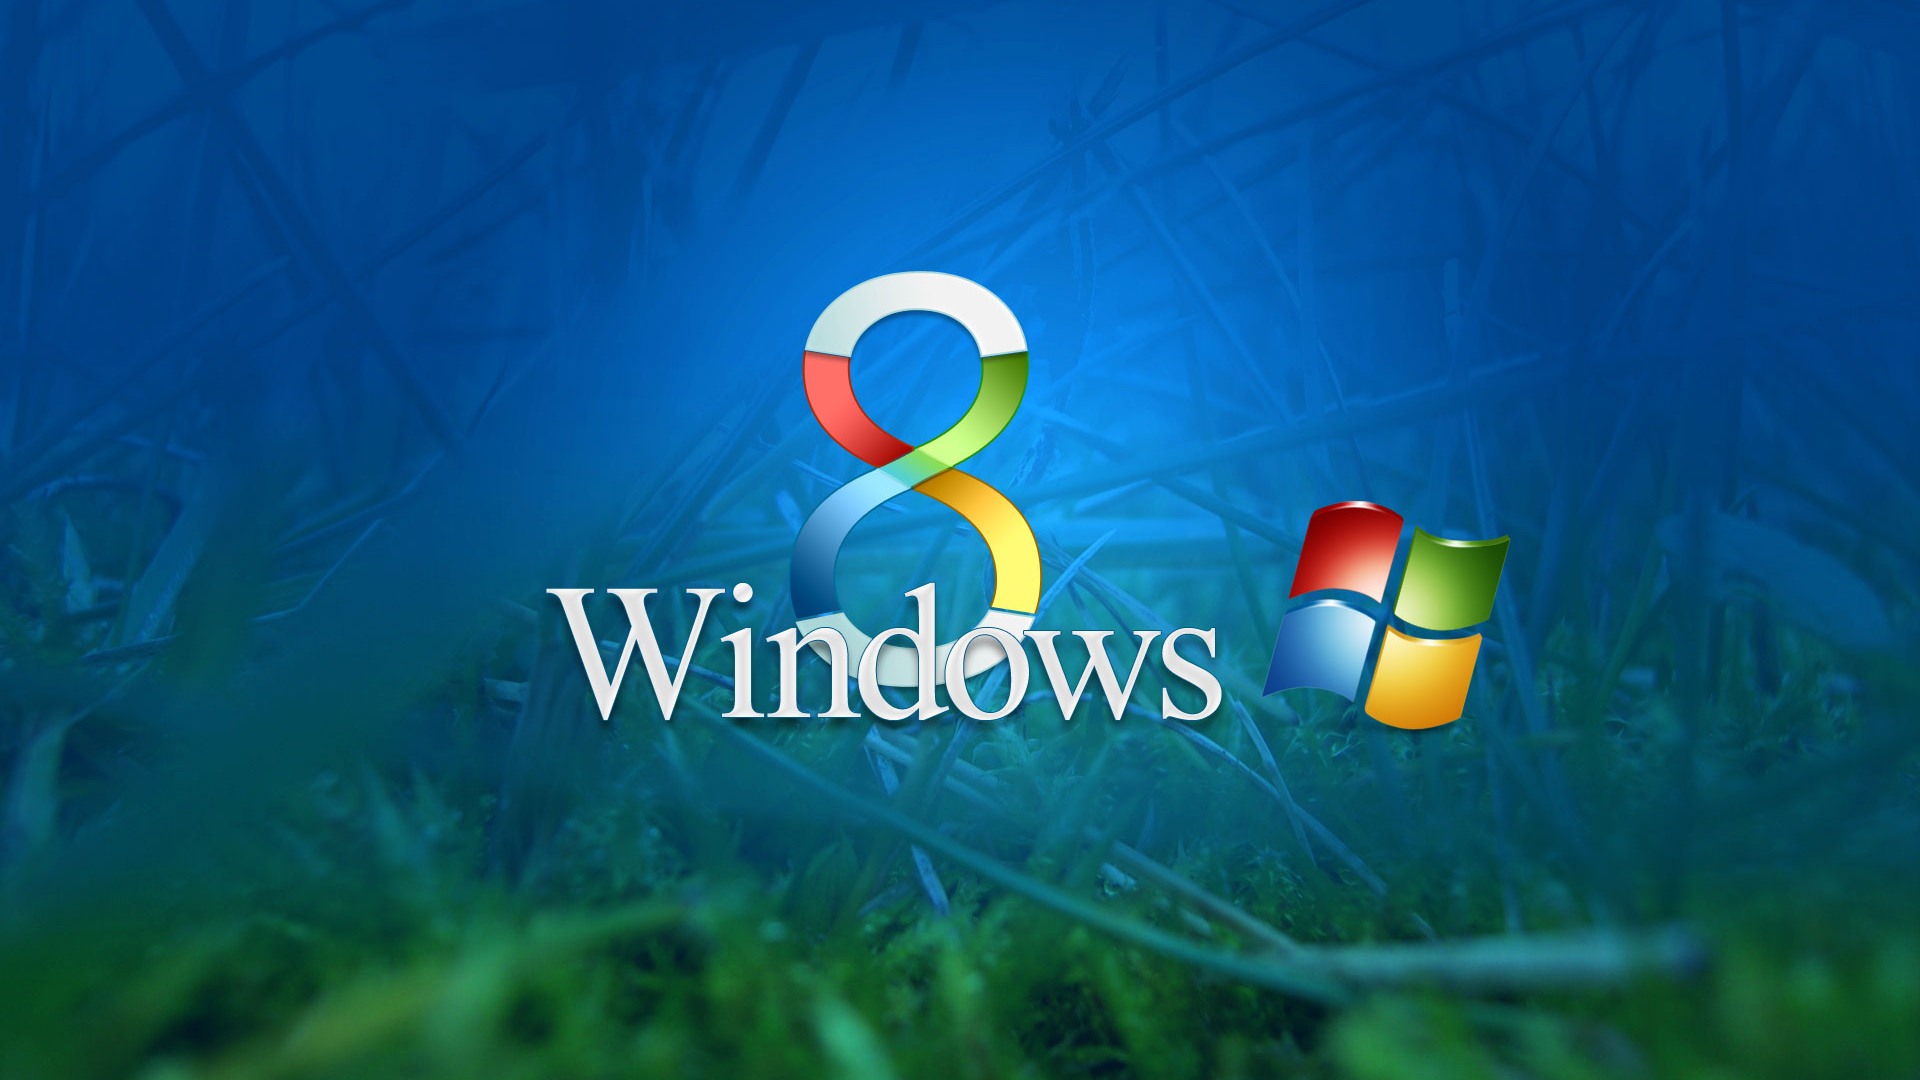 Windows 8 主題壁紙 (二) #1 - 1920x1080